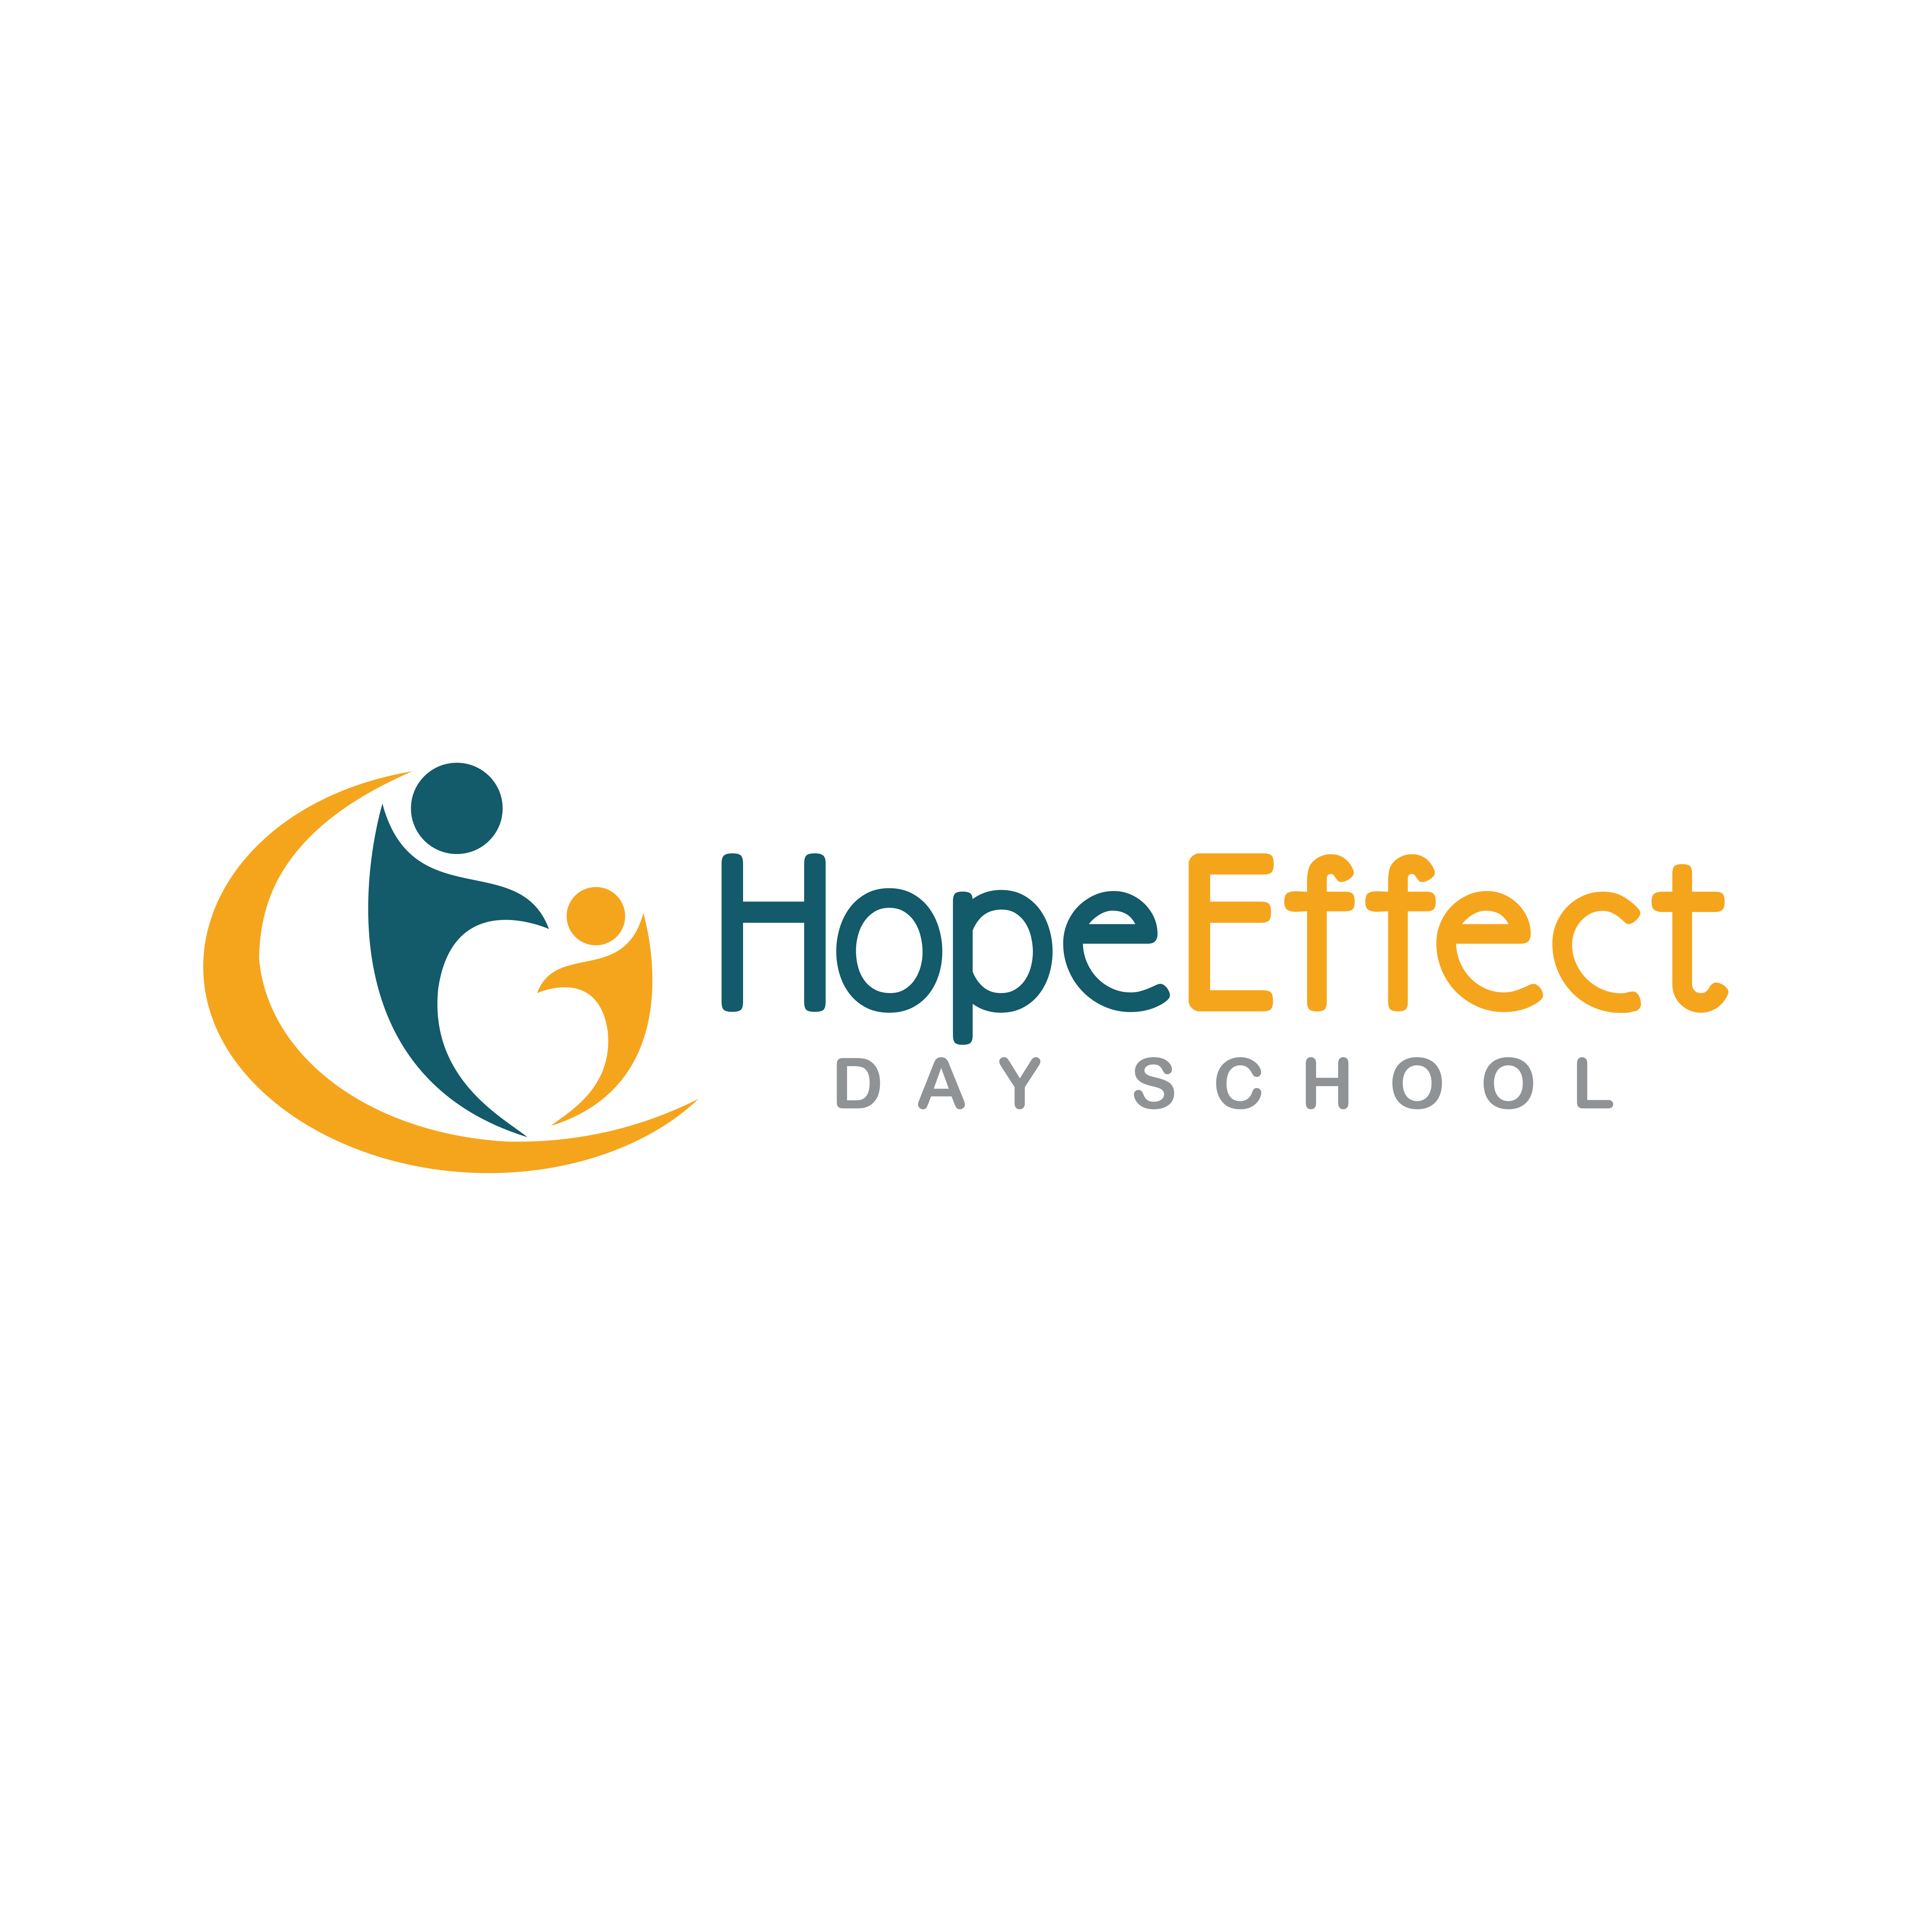 Hope Effect Day School